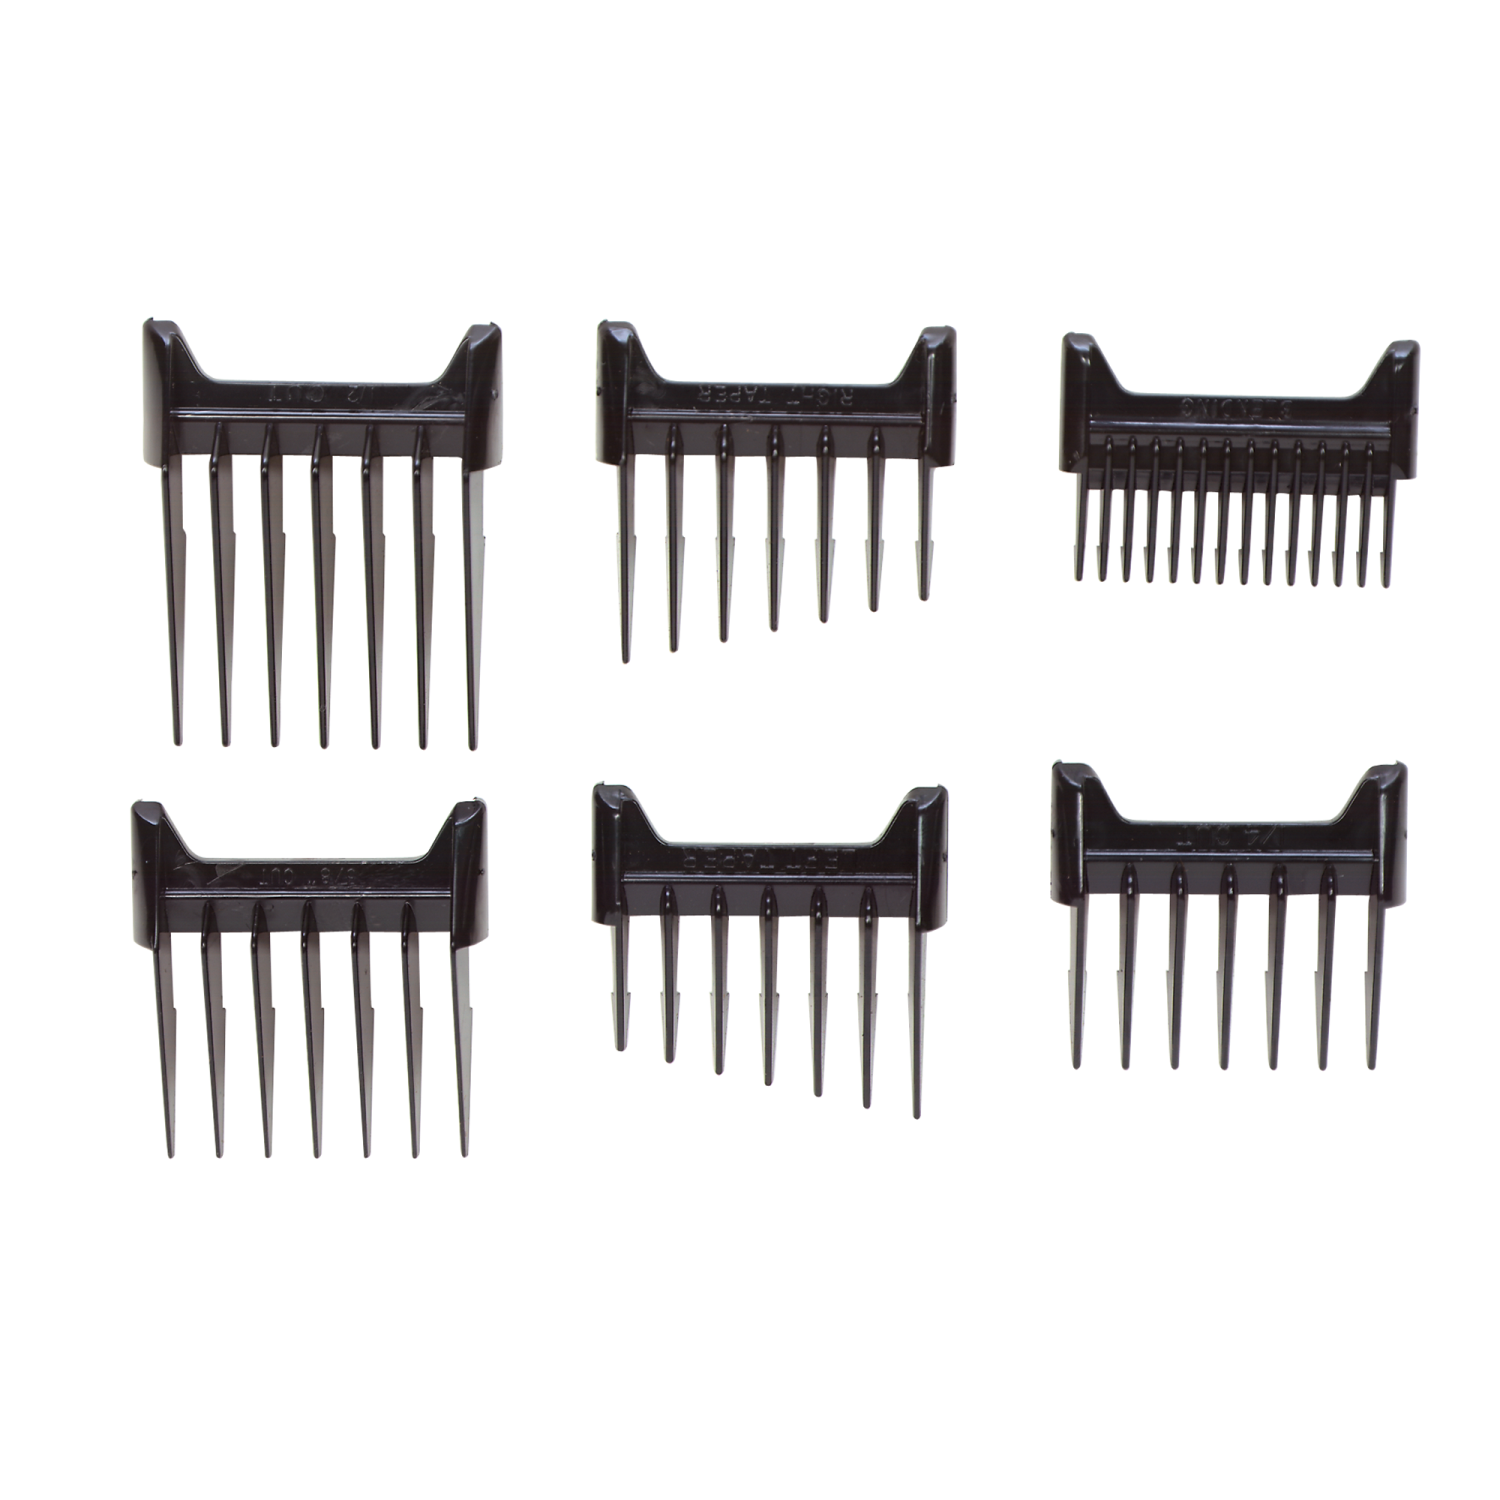 oster clipper guide comb set